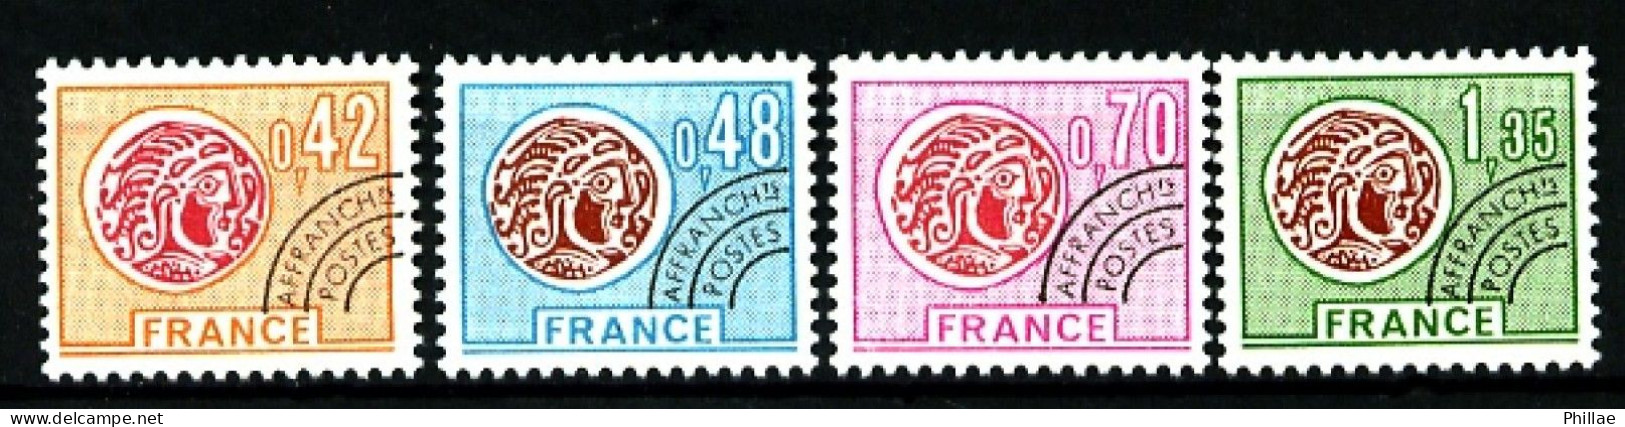 Préos  134/137 - Monnaie Gauloise - Complet 4 Valeurs - Neufs N** - TB - 1964-1988